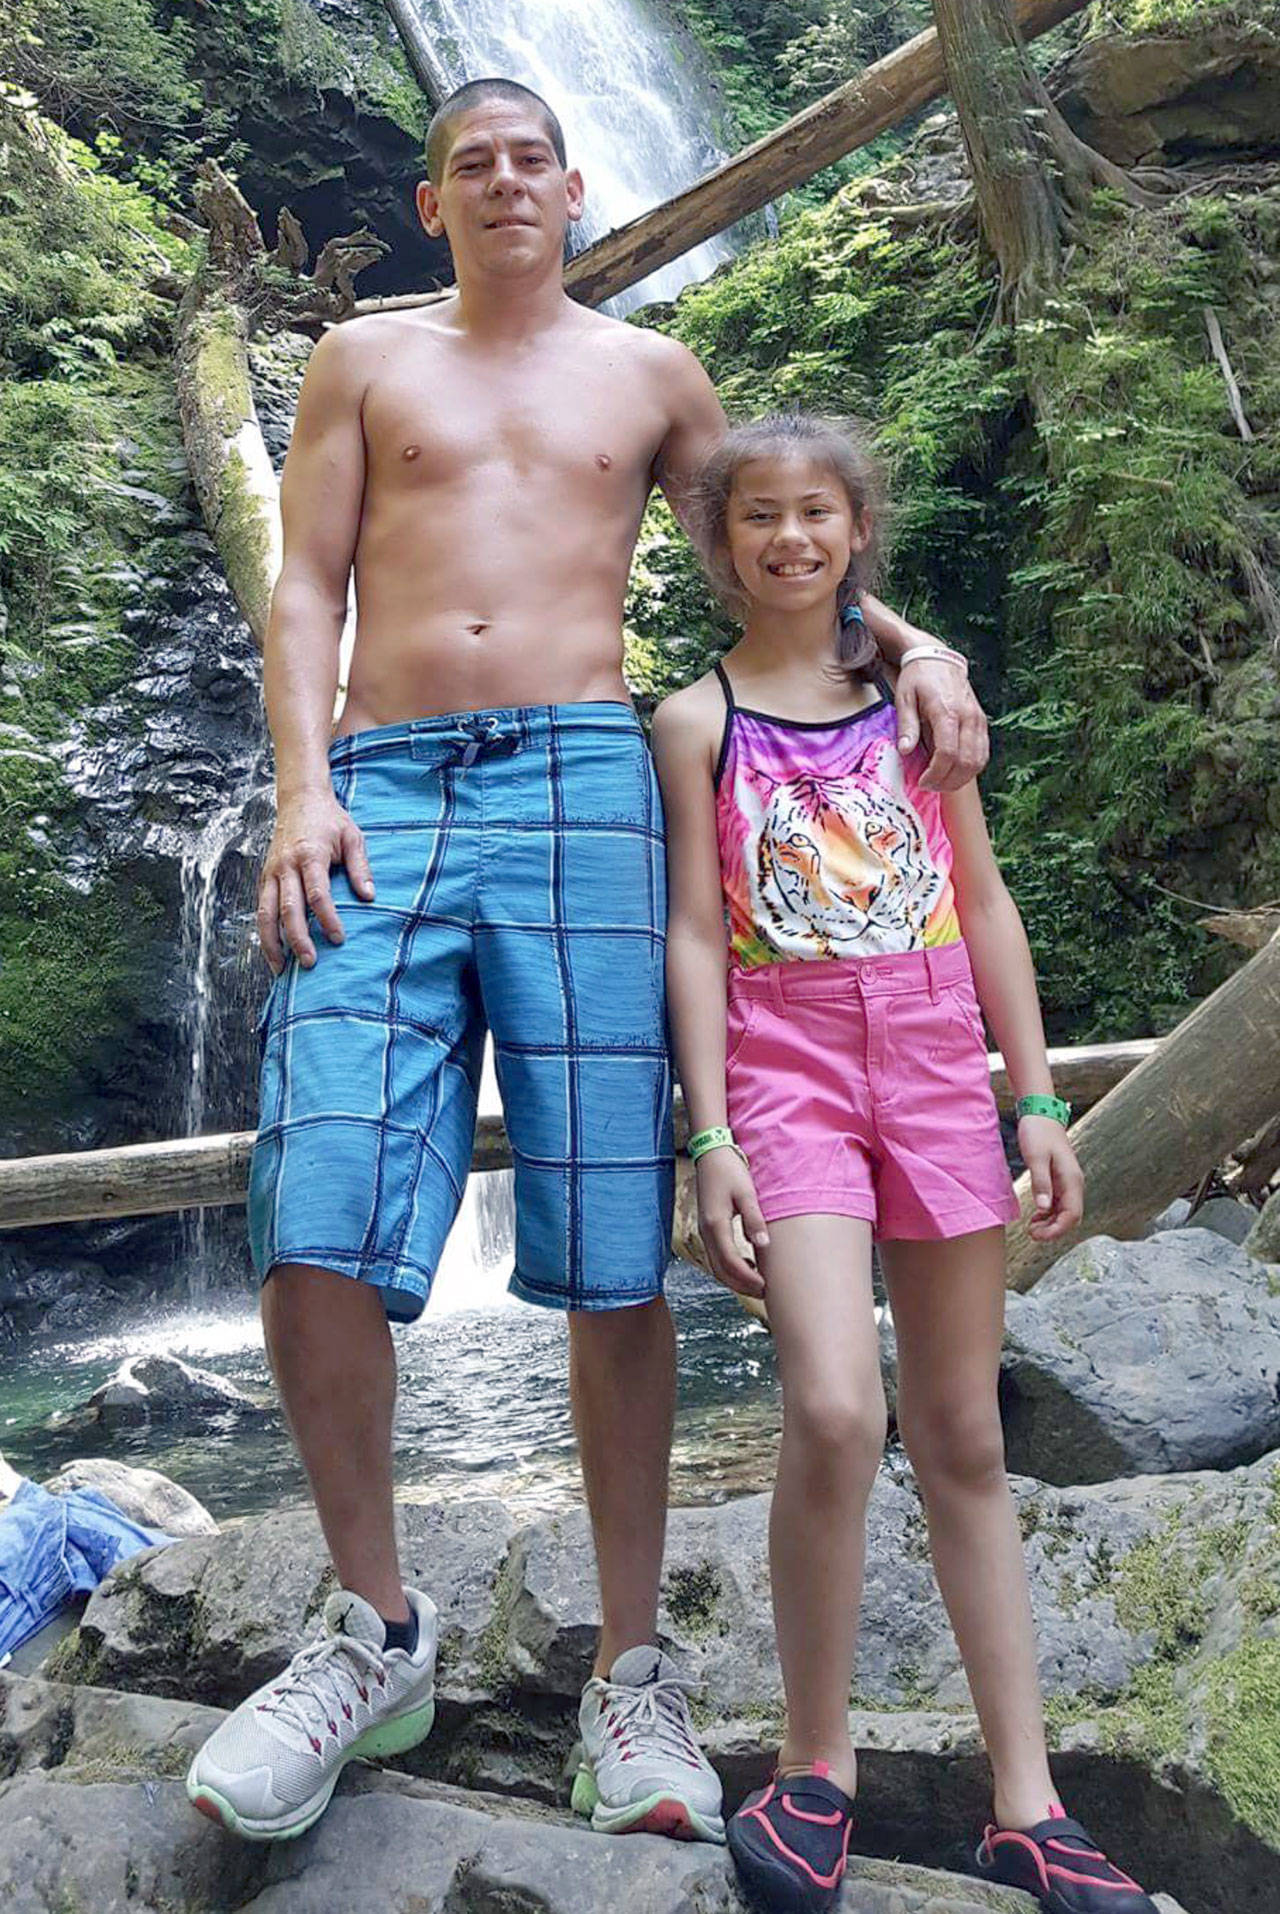 Jesse Cruz, pictured here with little sister, Vivianna Cruz, was reported missing Saturday after swimming in the Duckabush River near Brinnon. (David Ramirez)